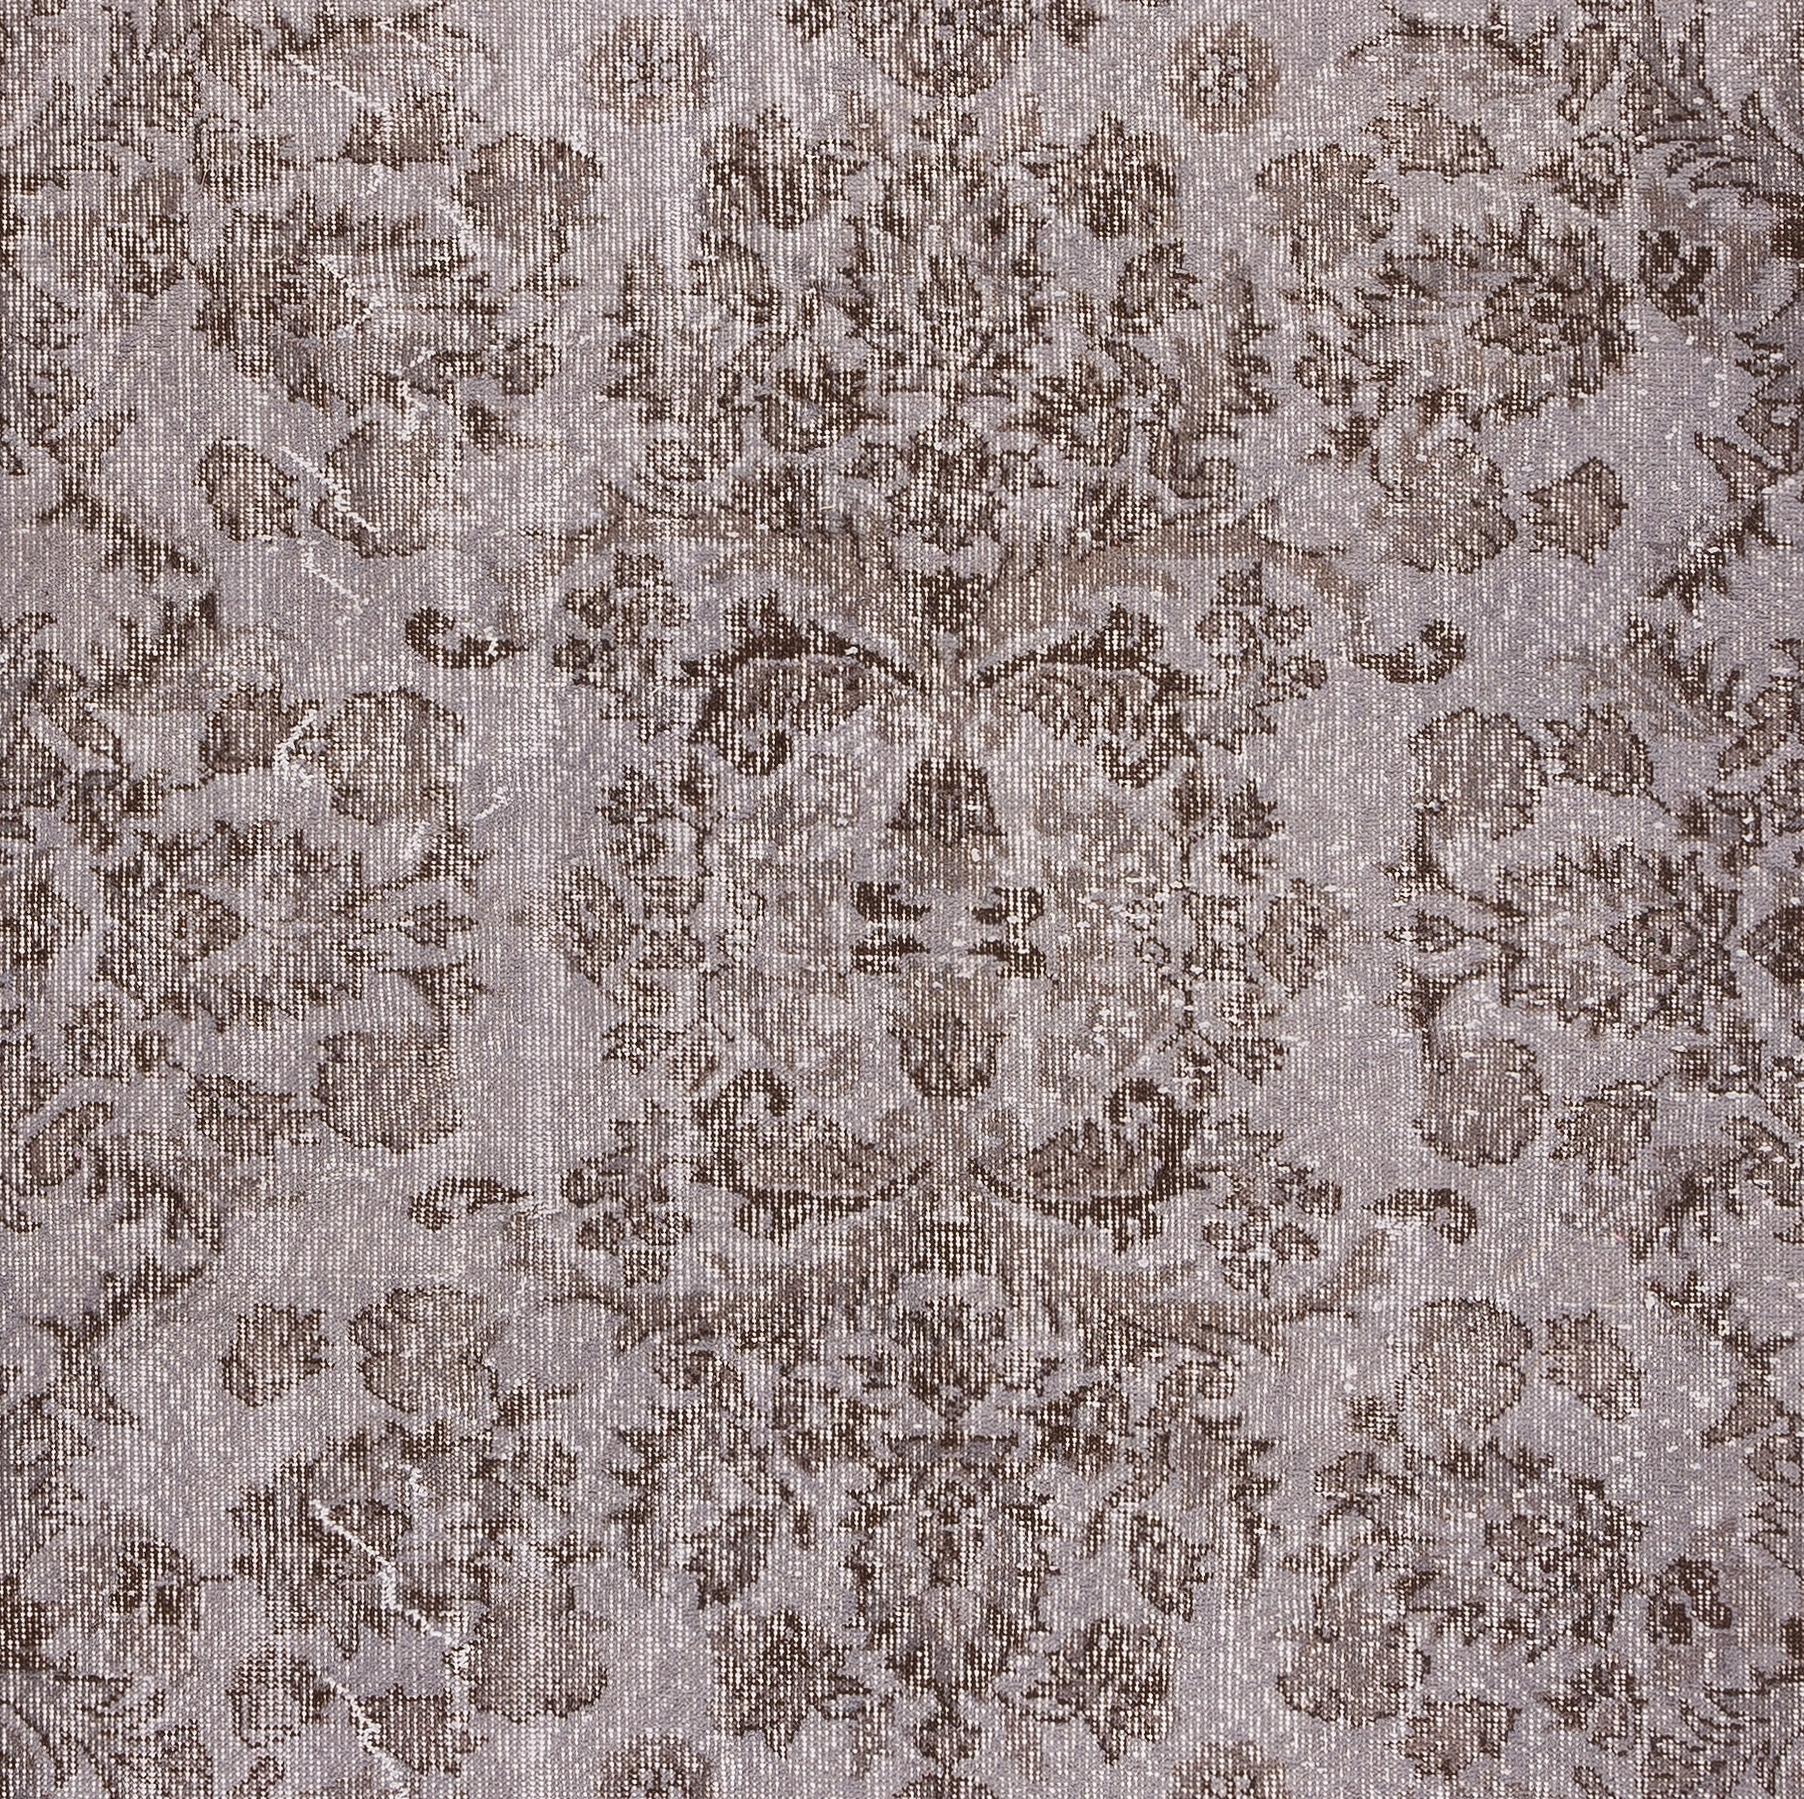 Hand-Woven 6.2x10 Ft Handmade Vintage Turkish Area Rug in Gray, Modern Living Room Carpet For Sale